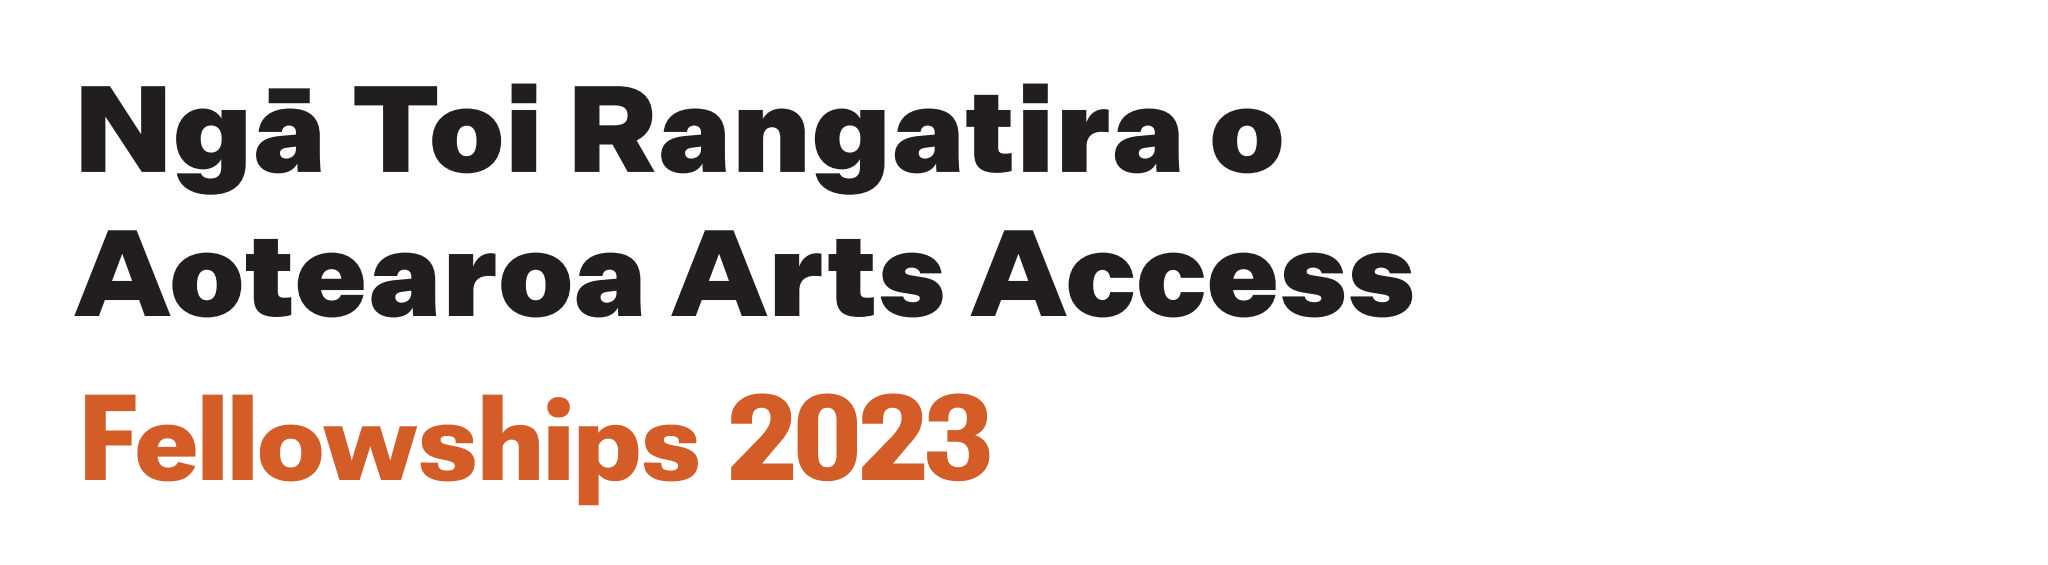 The logo has the words Ngā Toi Rangatira o Aotearoa Arts Access Fellowships 2023 